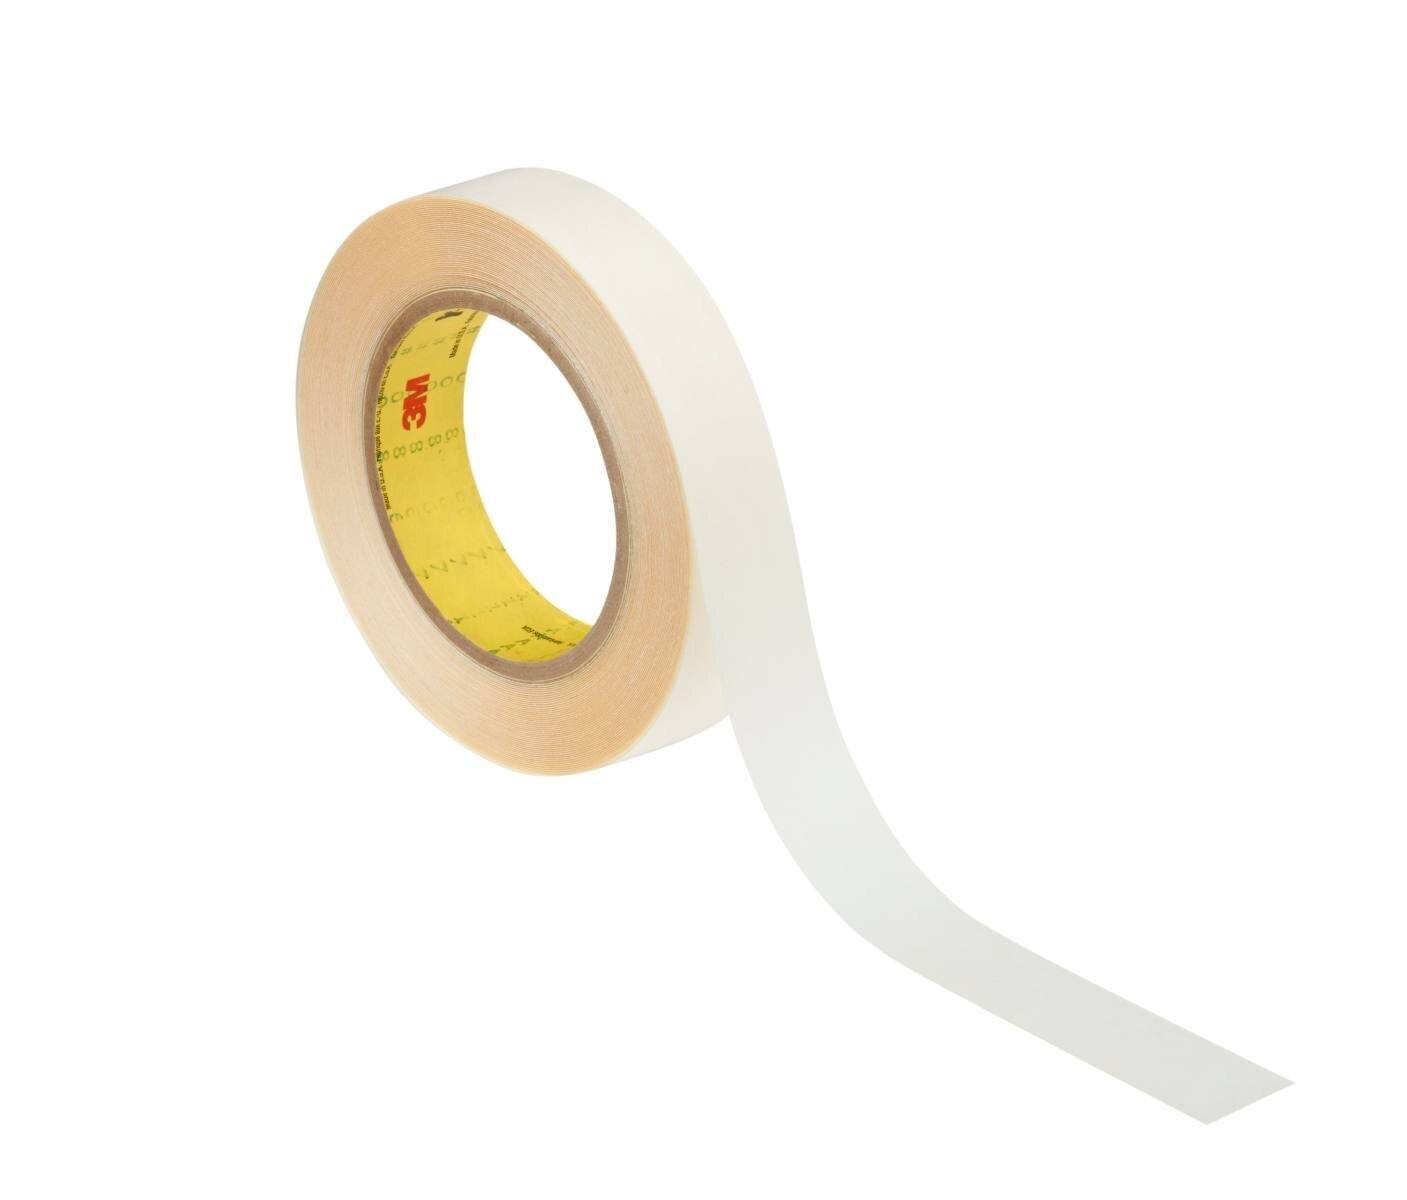 3M polyurethane adhesive tape 8671, 101.6 mm x 32.9 m, 0.36 mm, transparent